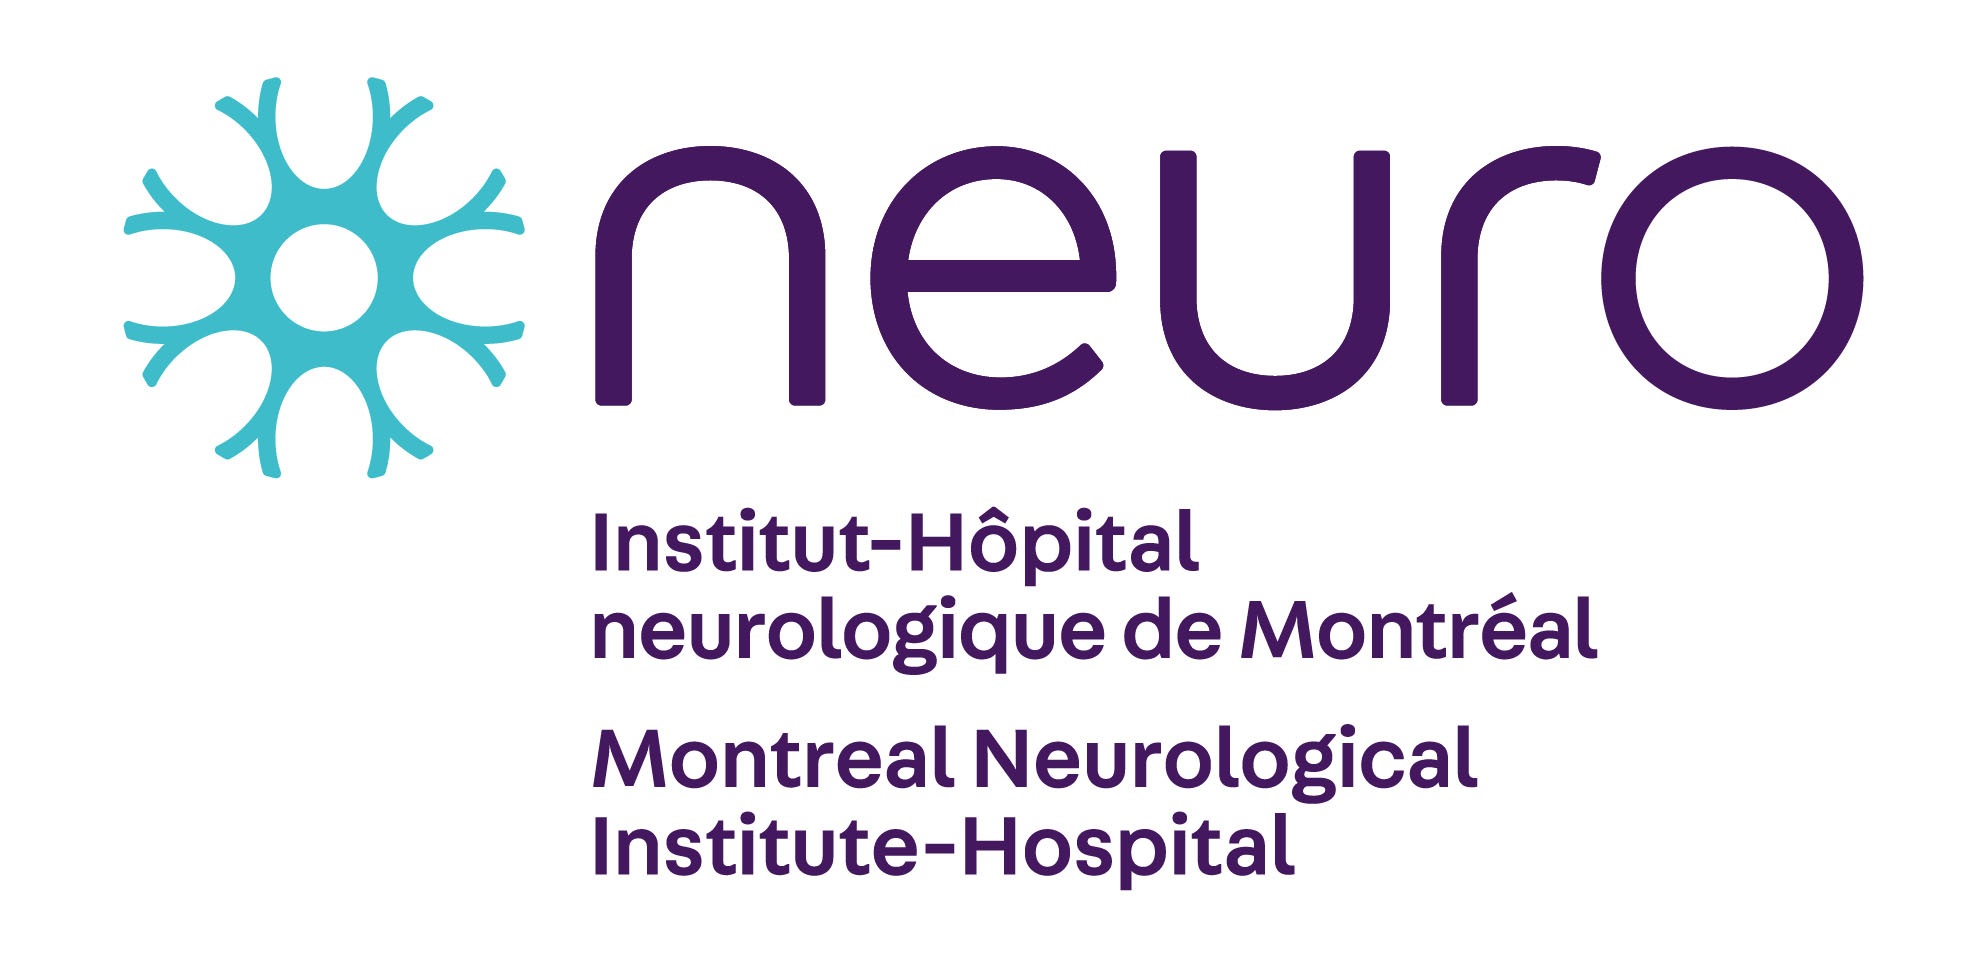 the Montreal Neurological Institute-Hospital logo